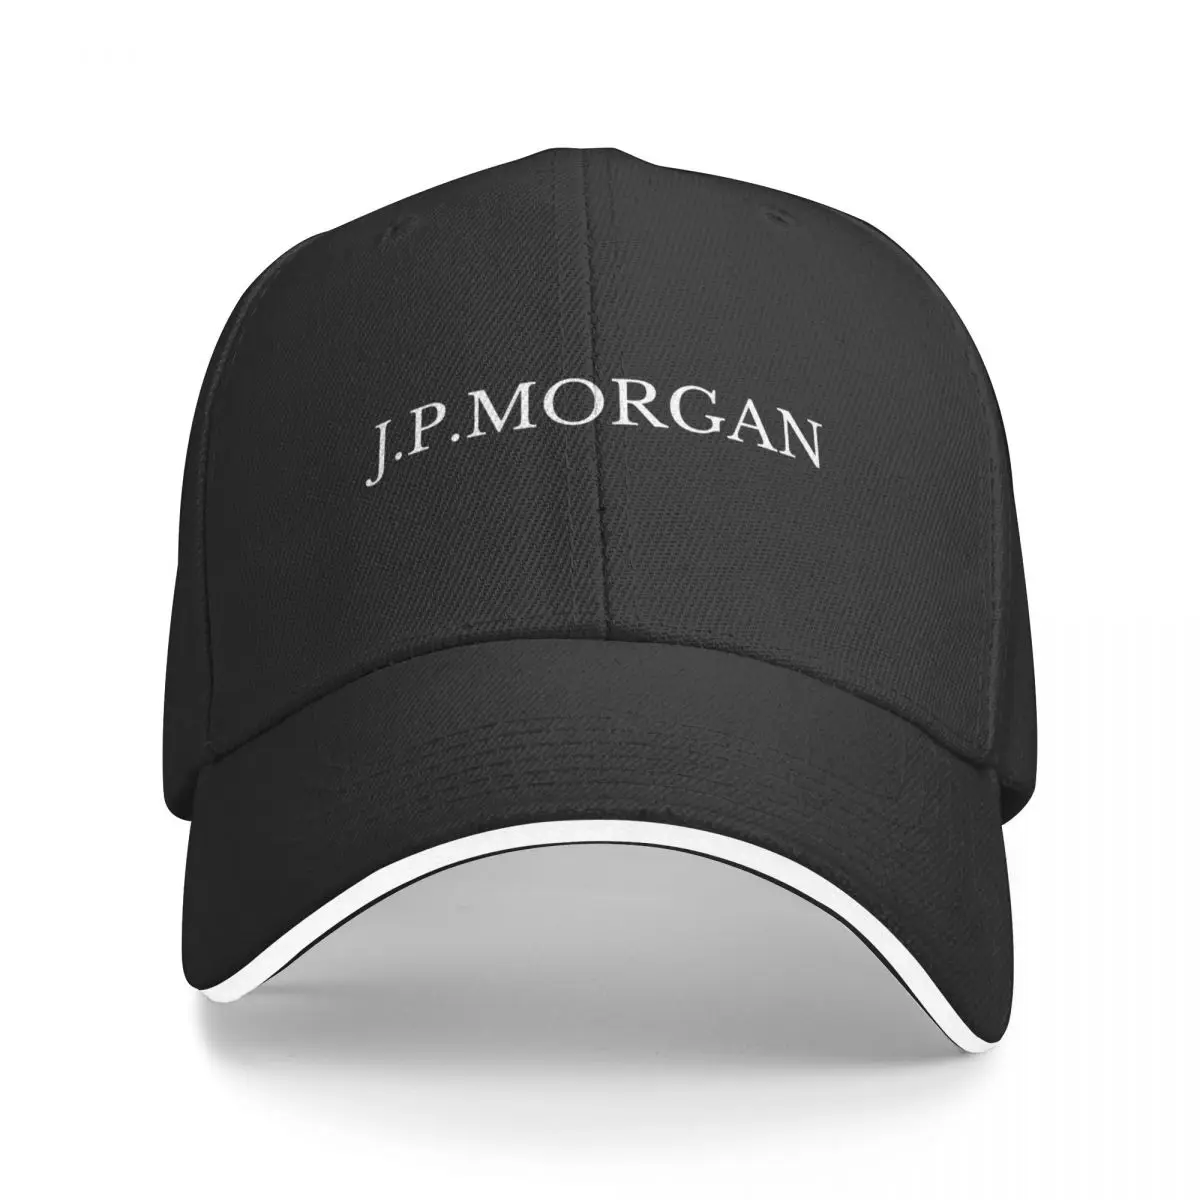 

J.P Morgan Baseball Cap New In The Hat Sun Hat For Children Sports Caps Hat Women Men's